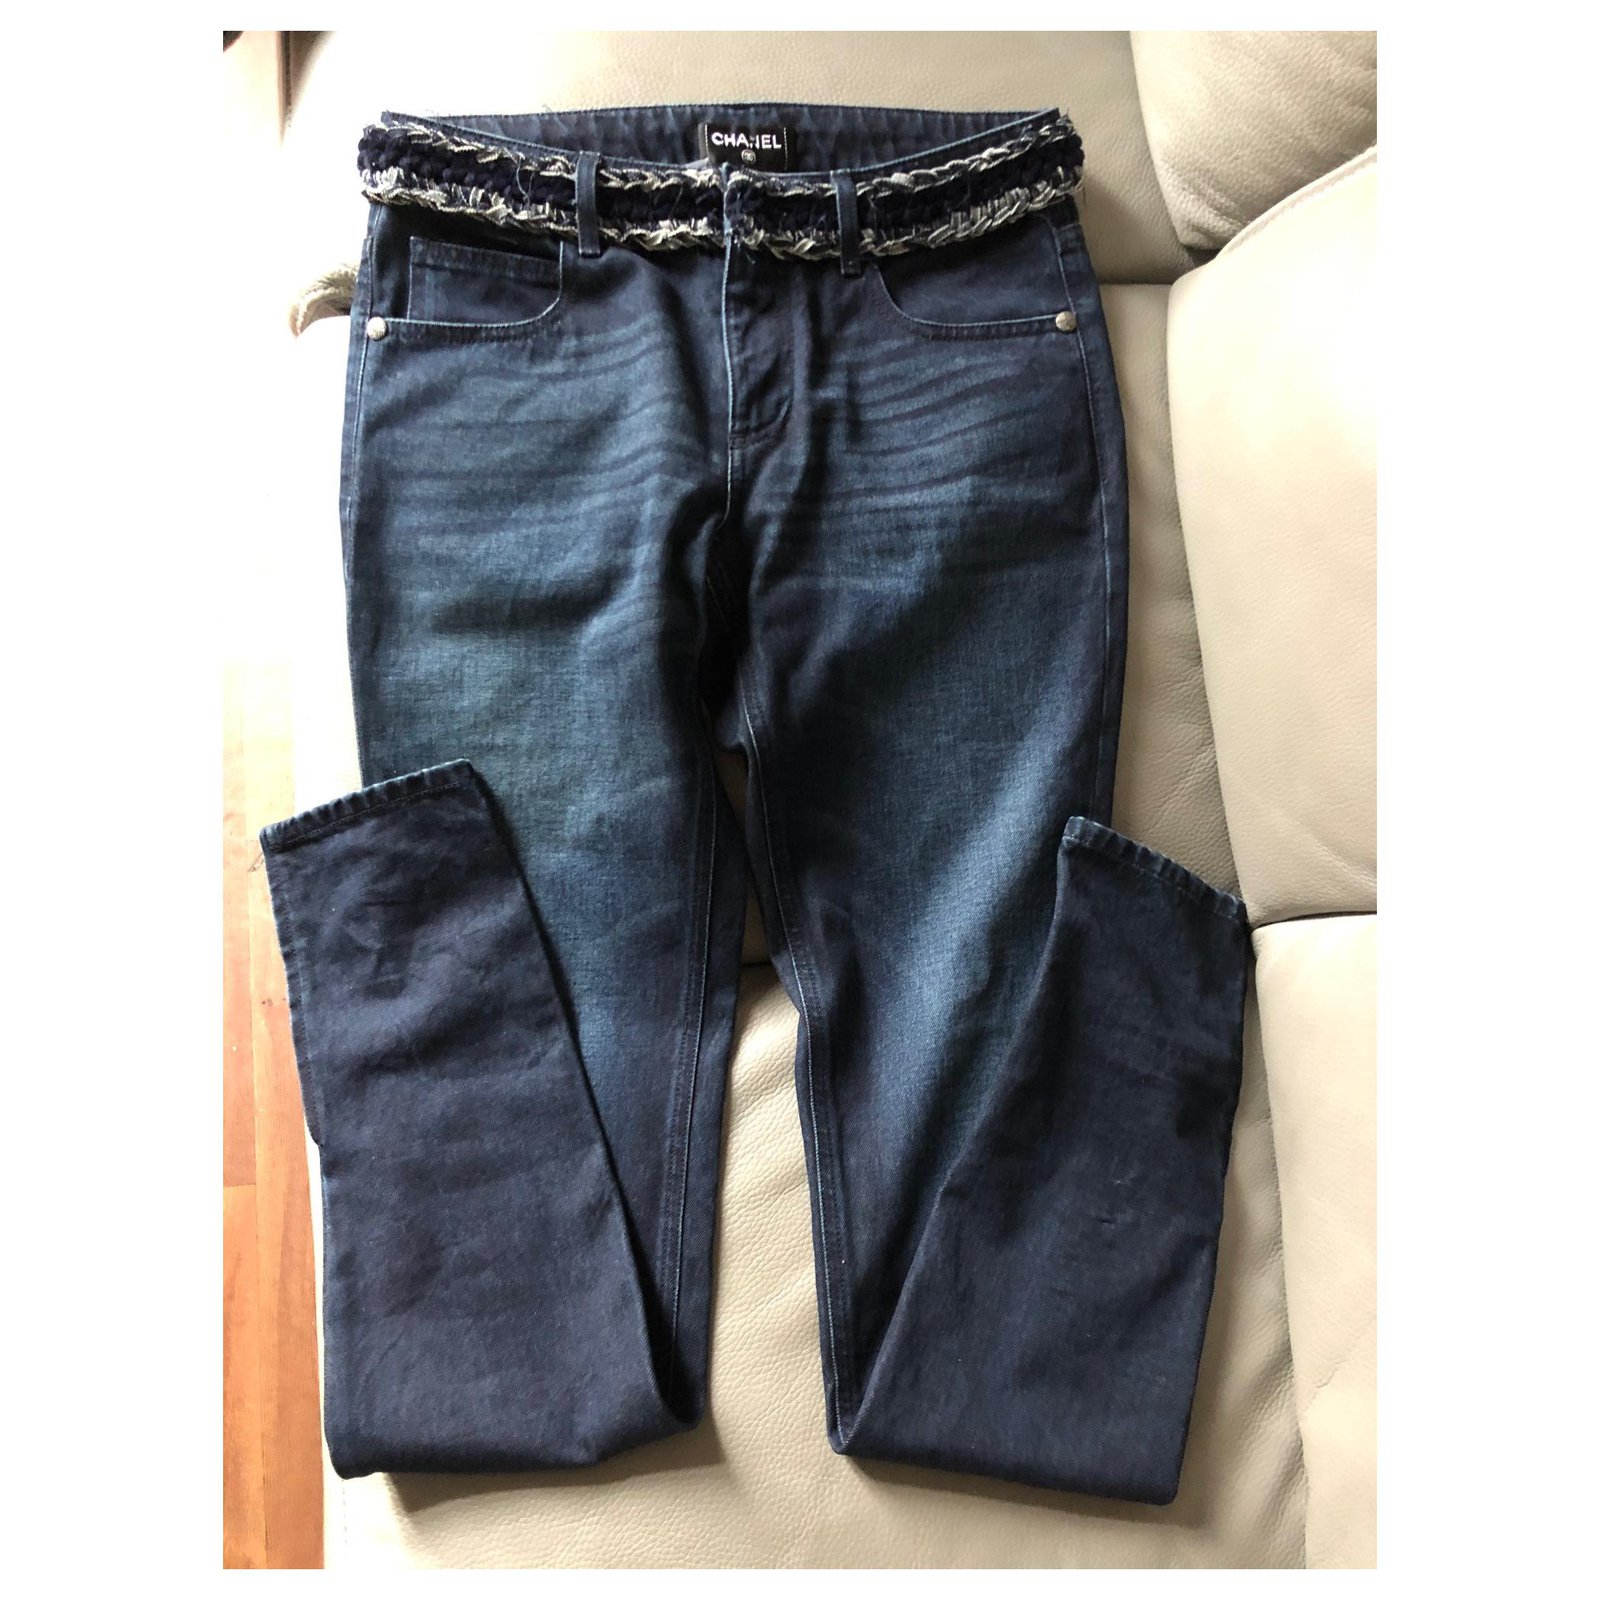 Judy Blue Jeans | Holly Springs High Rise Wide Leg Trousers JB88457 26/3 / Medium Blue